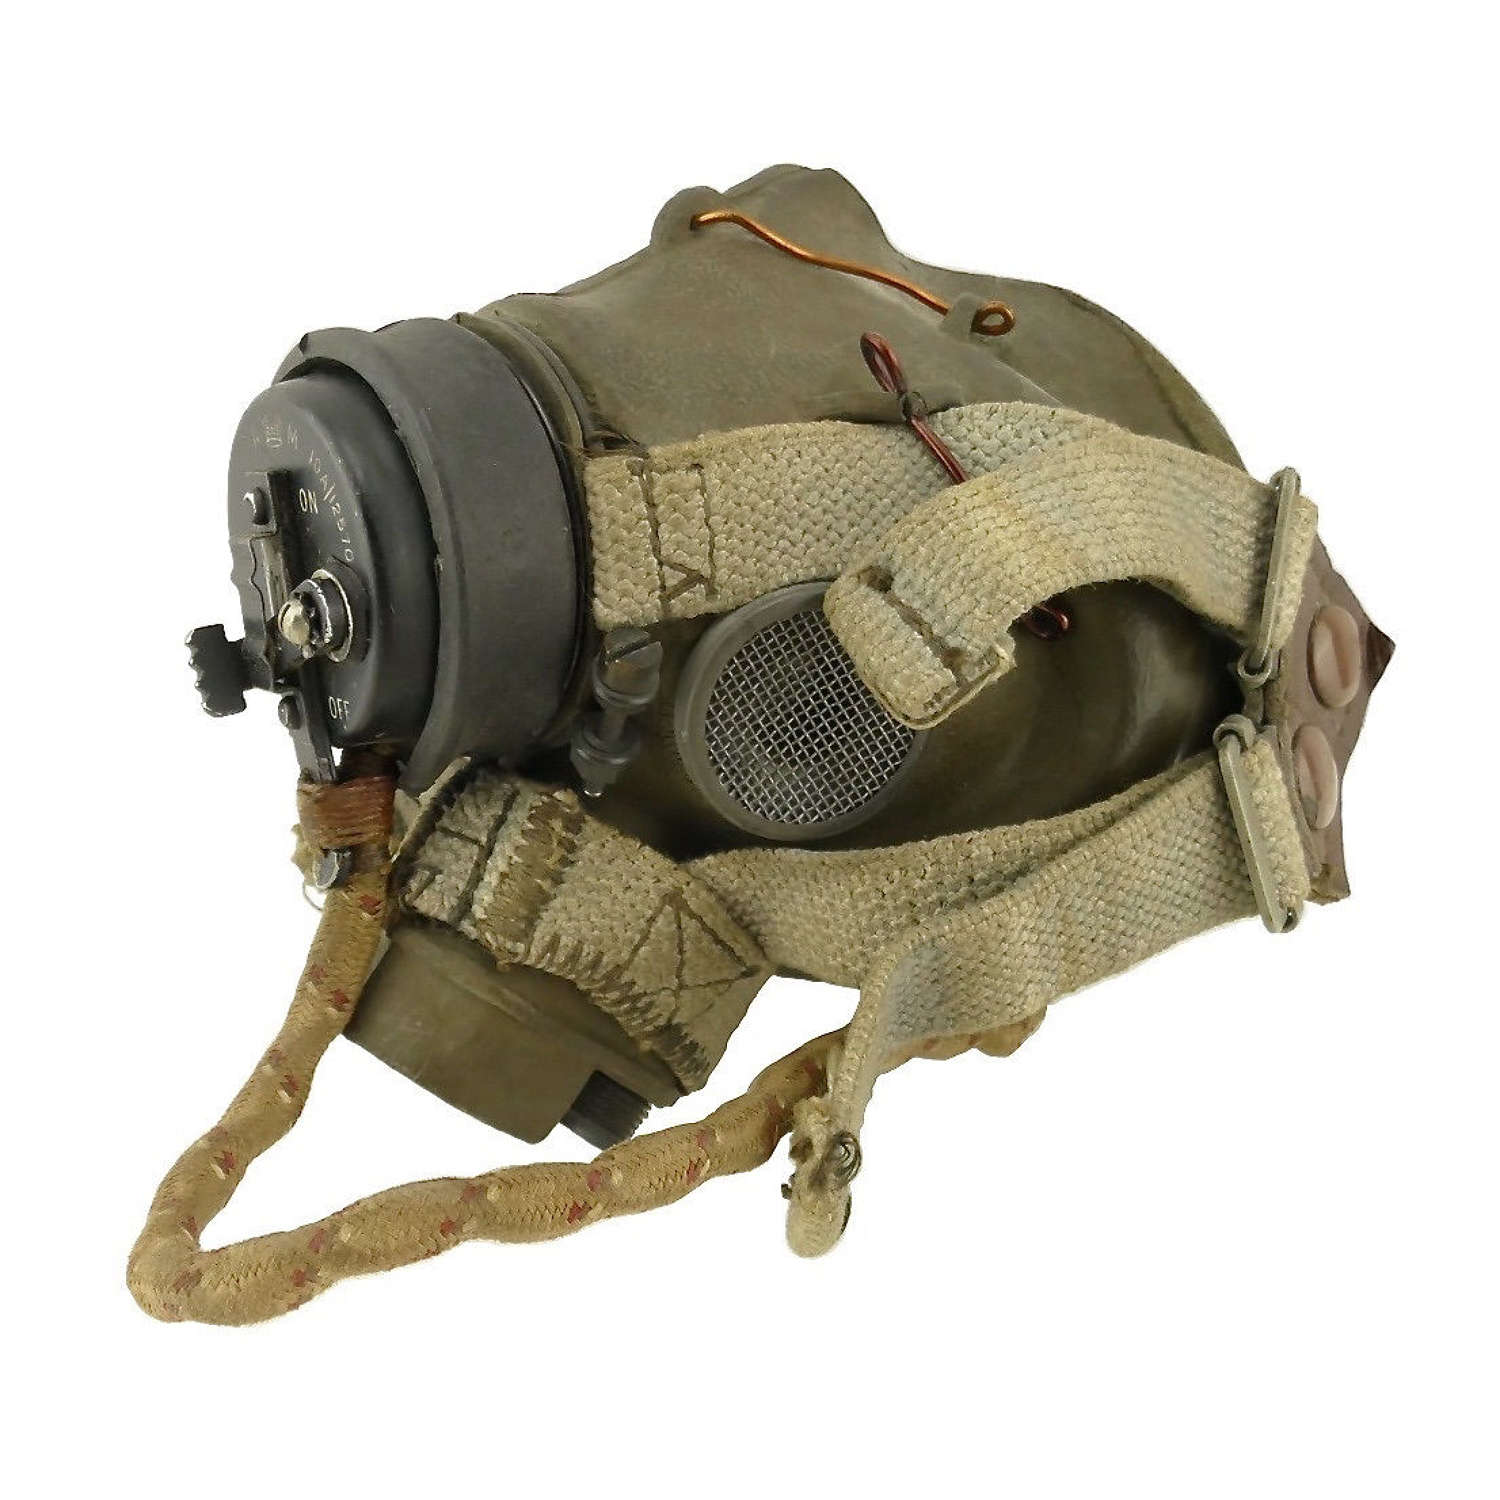 RAF type G oxygen mask